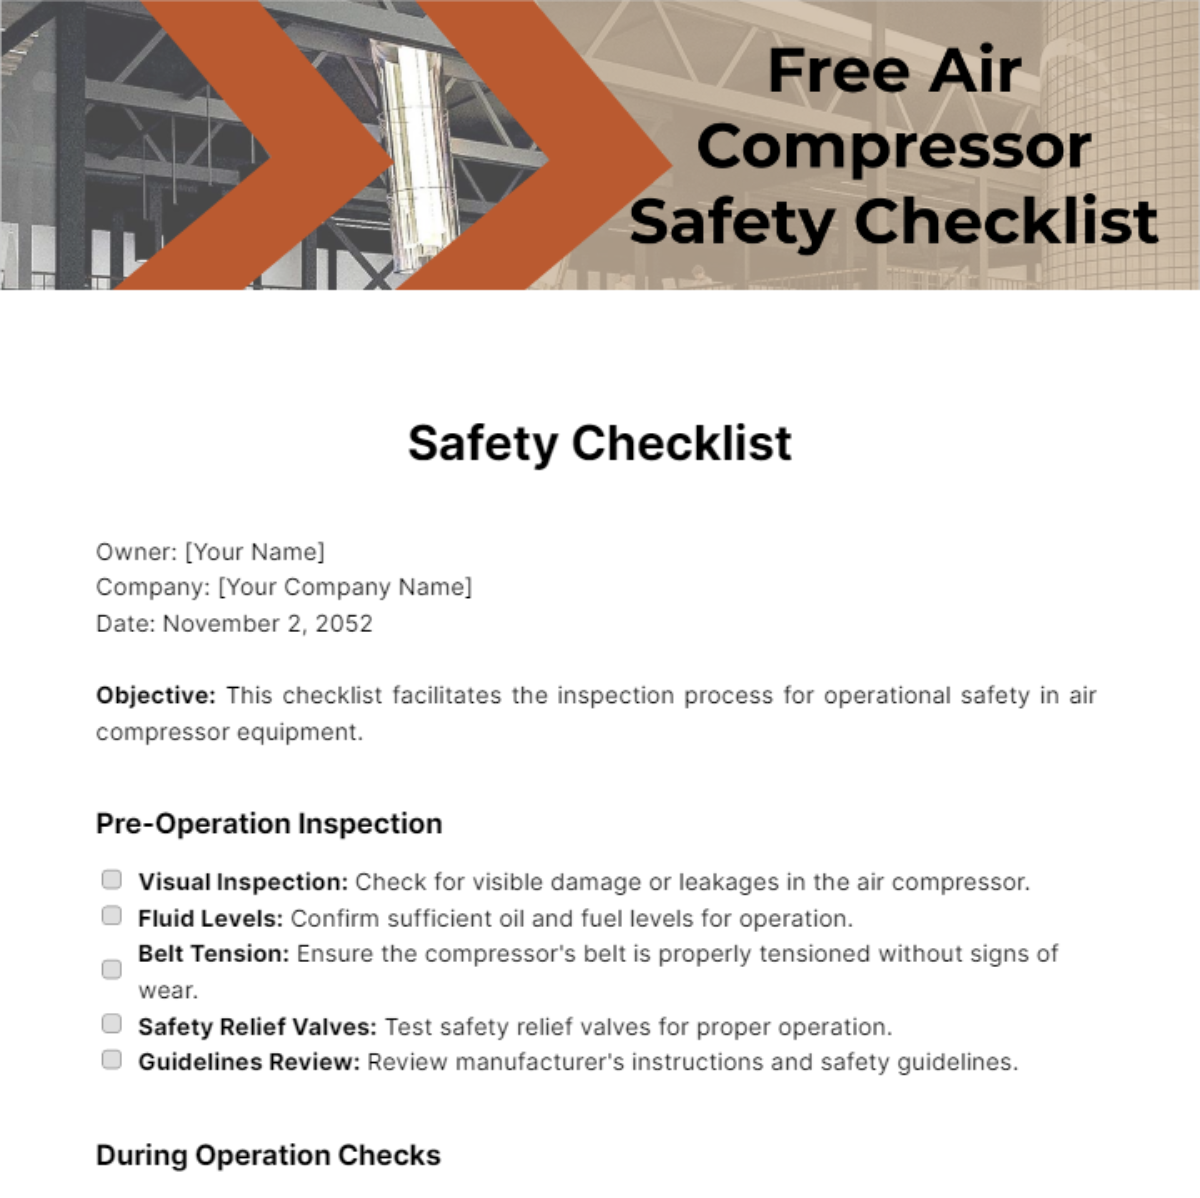 Free Air Compressor Safety Checklist Template